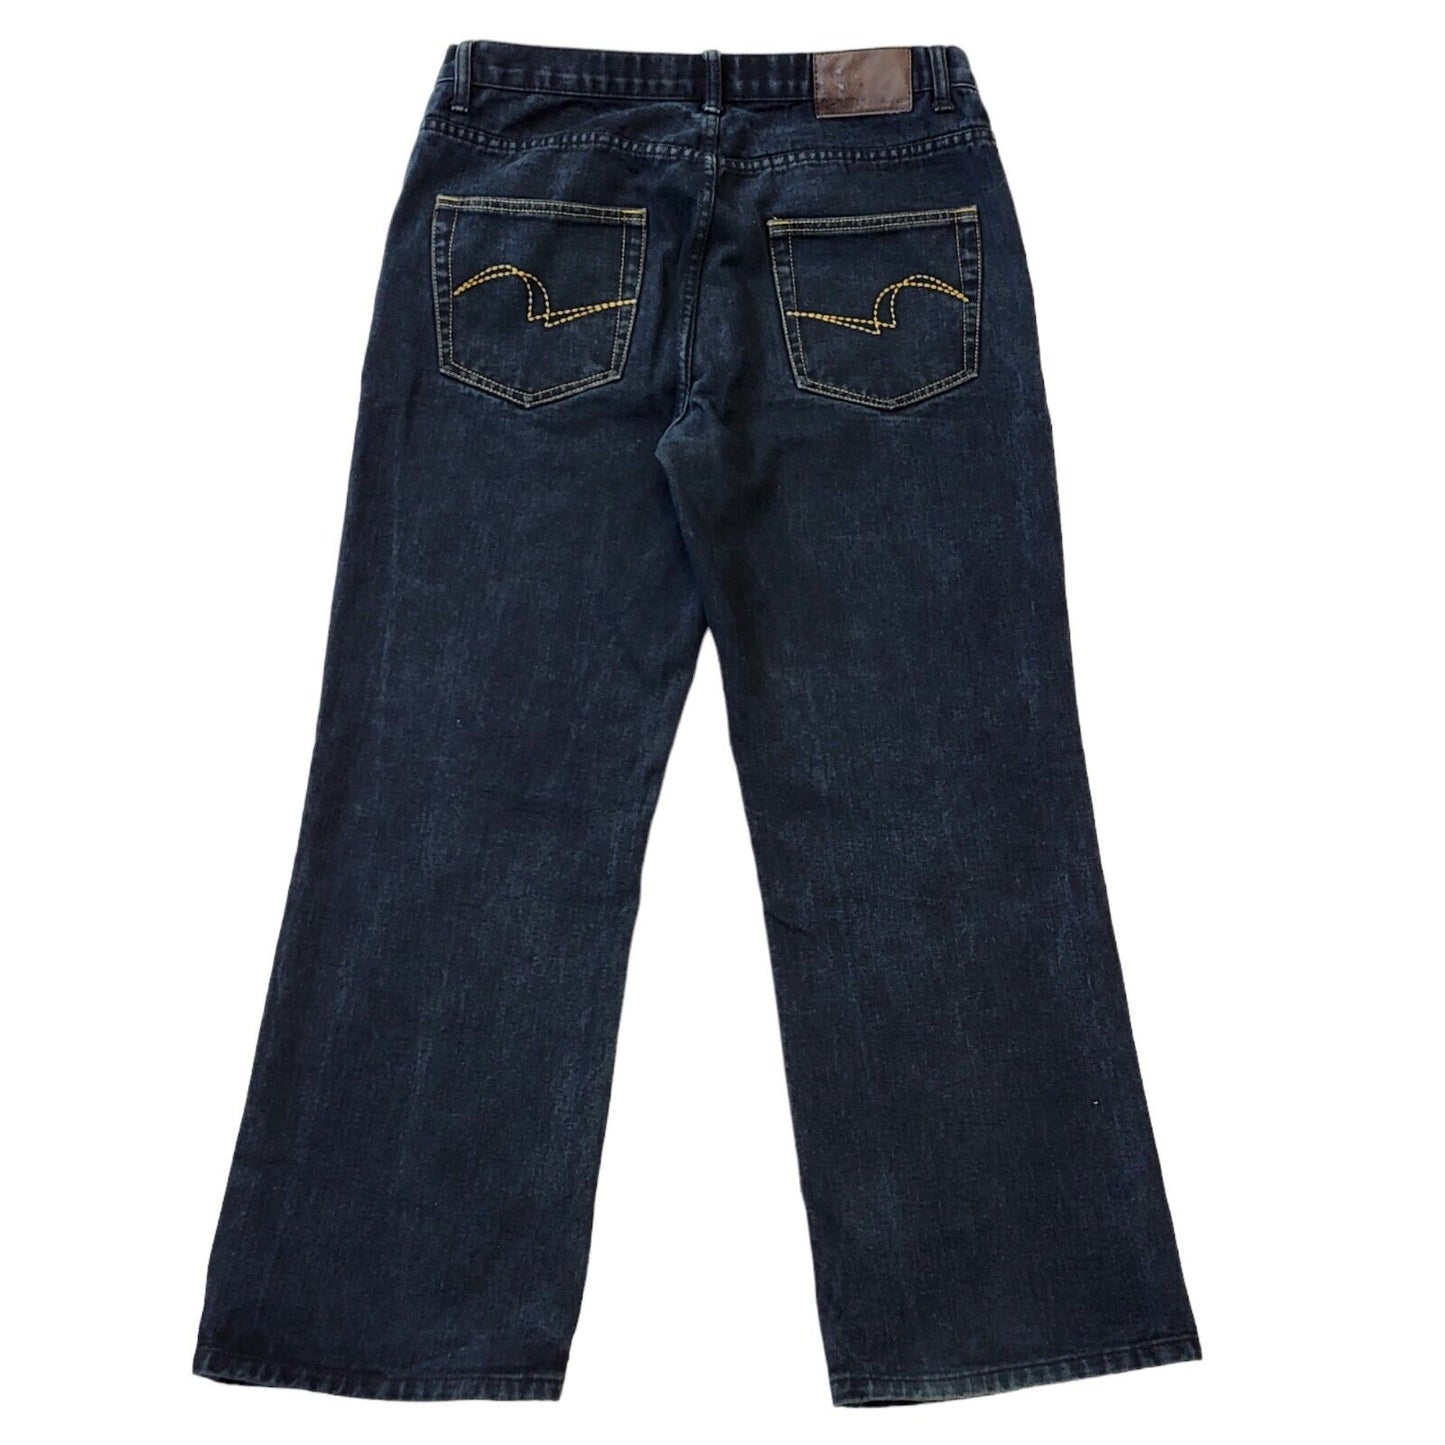 Lee Cooper Jeans (XL)